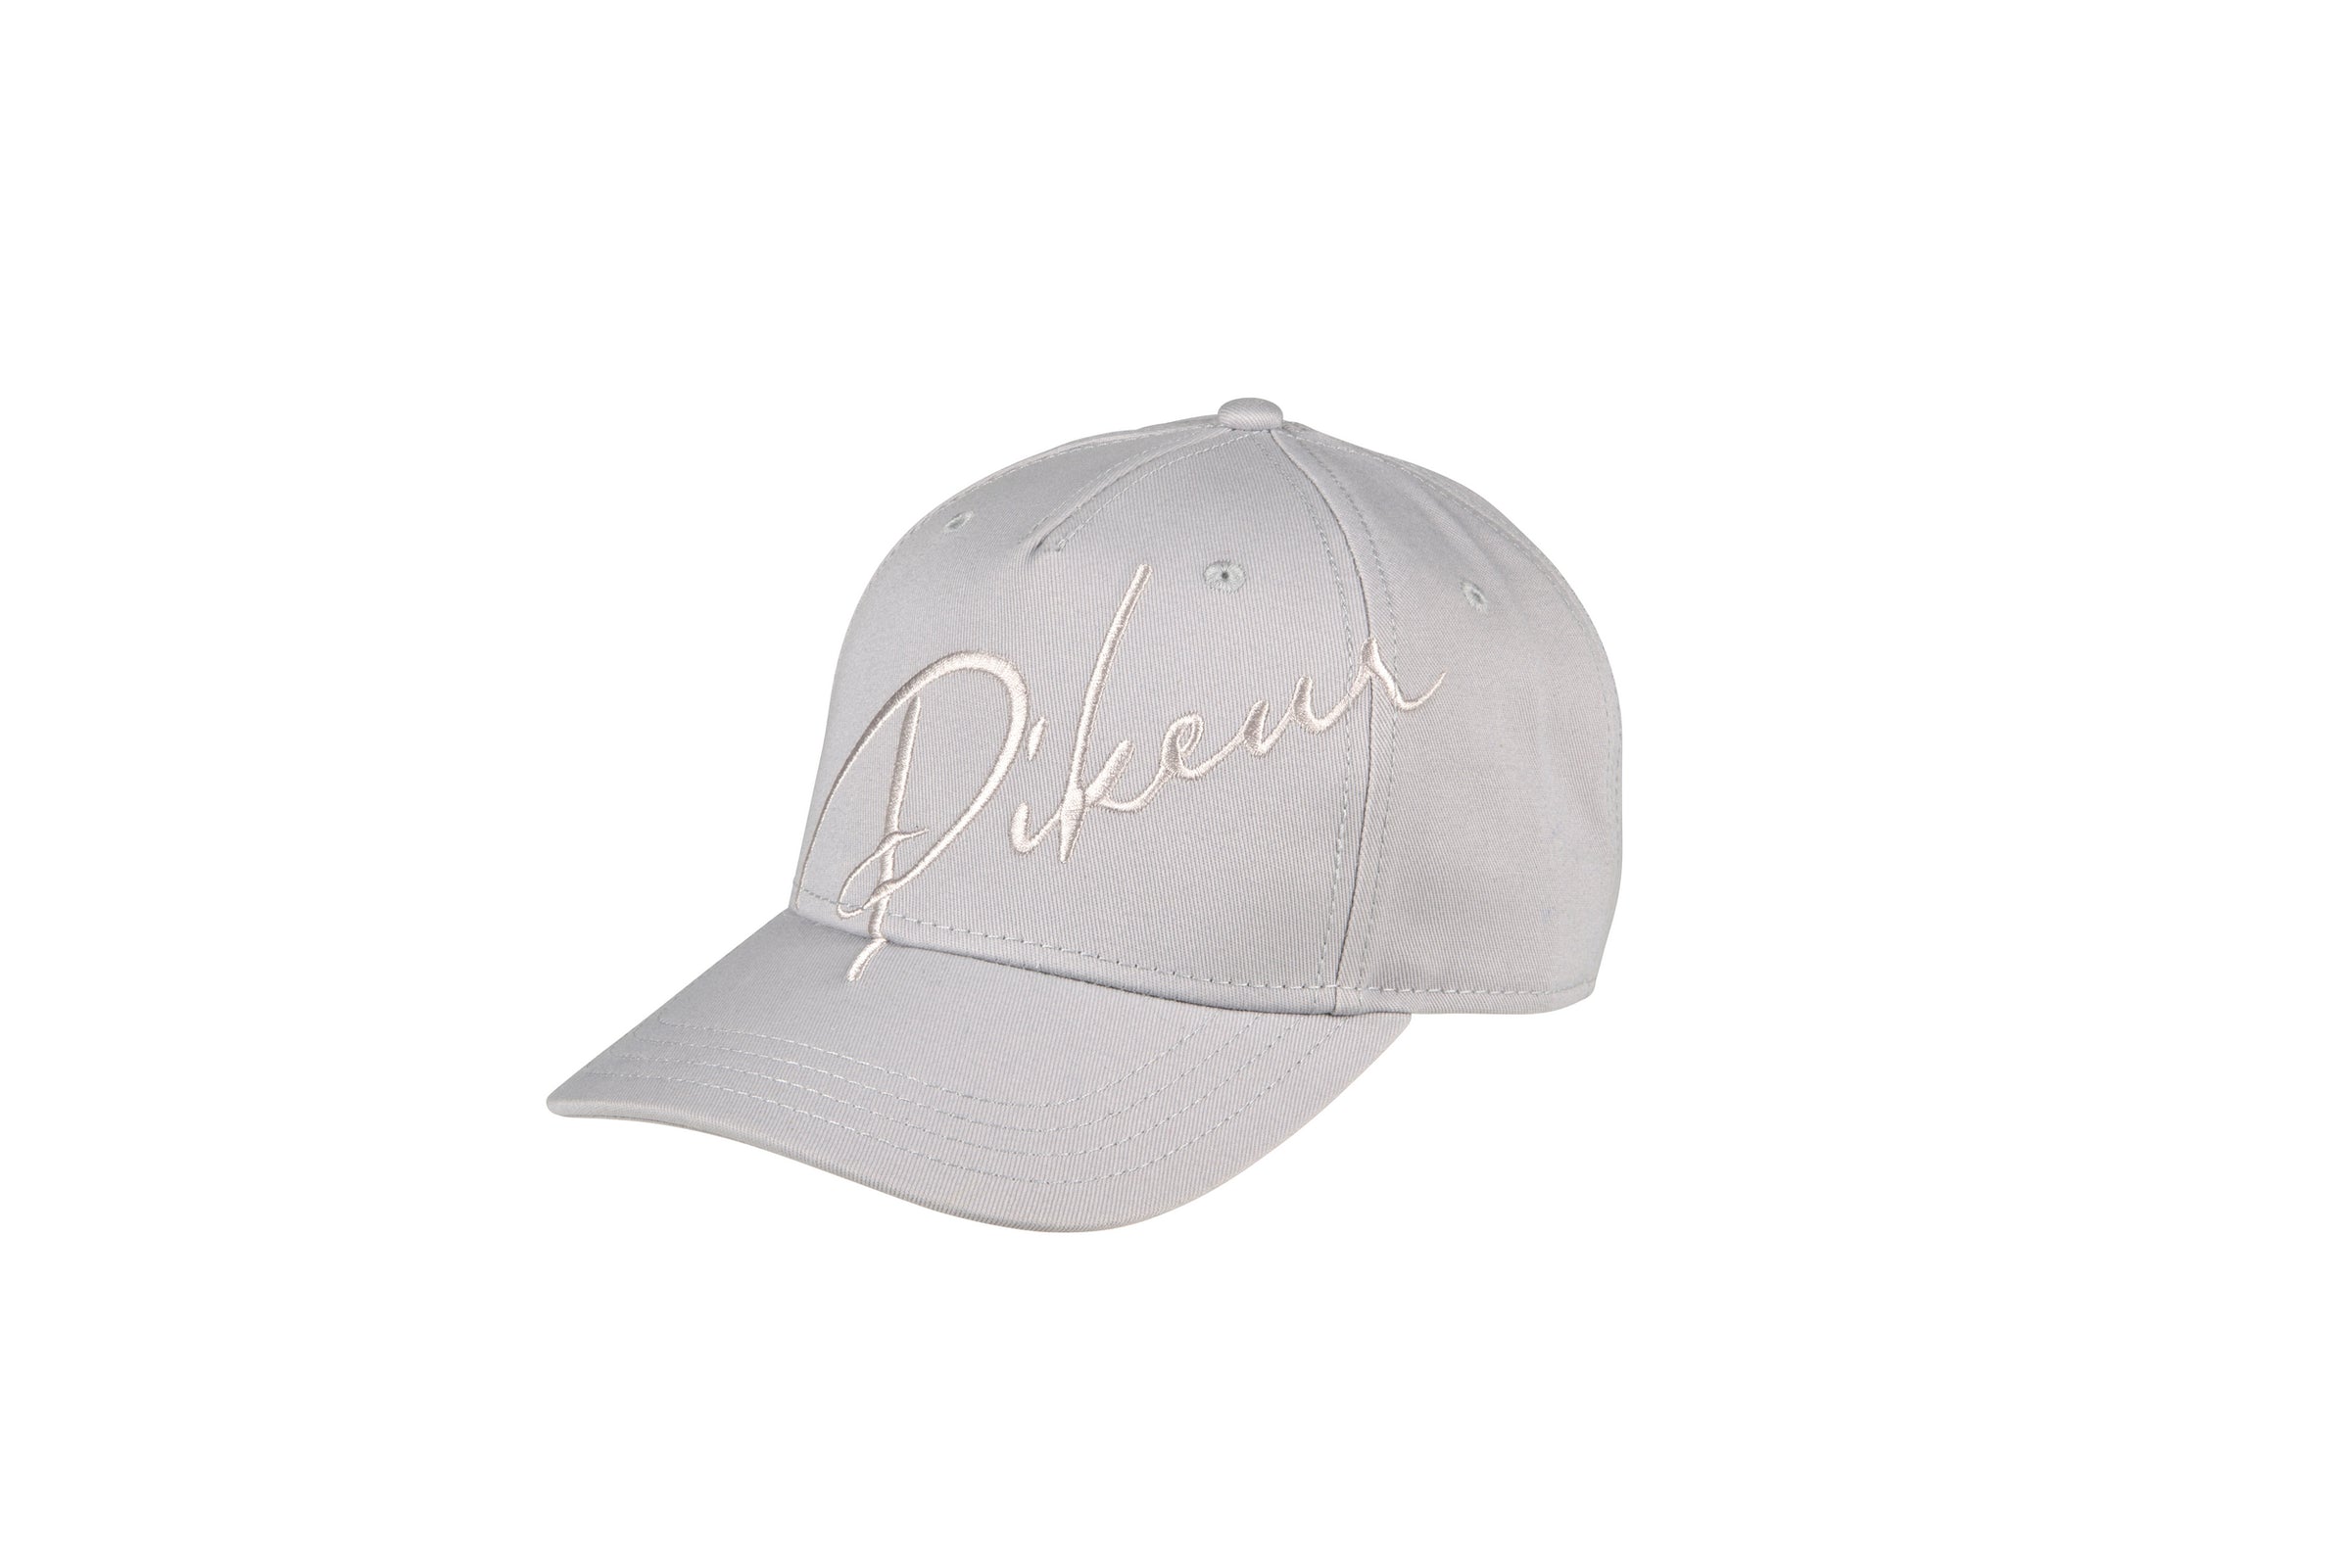 Pikeur cotton Silver cap